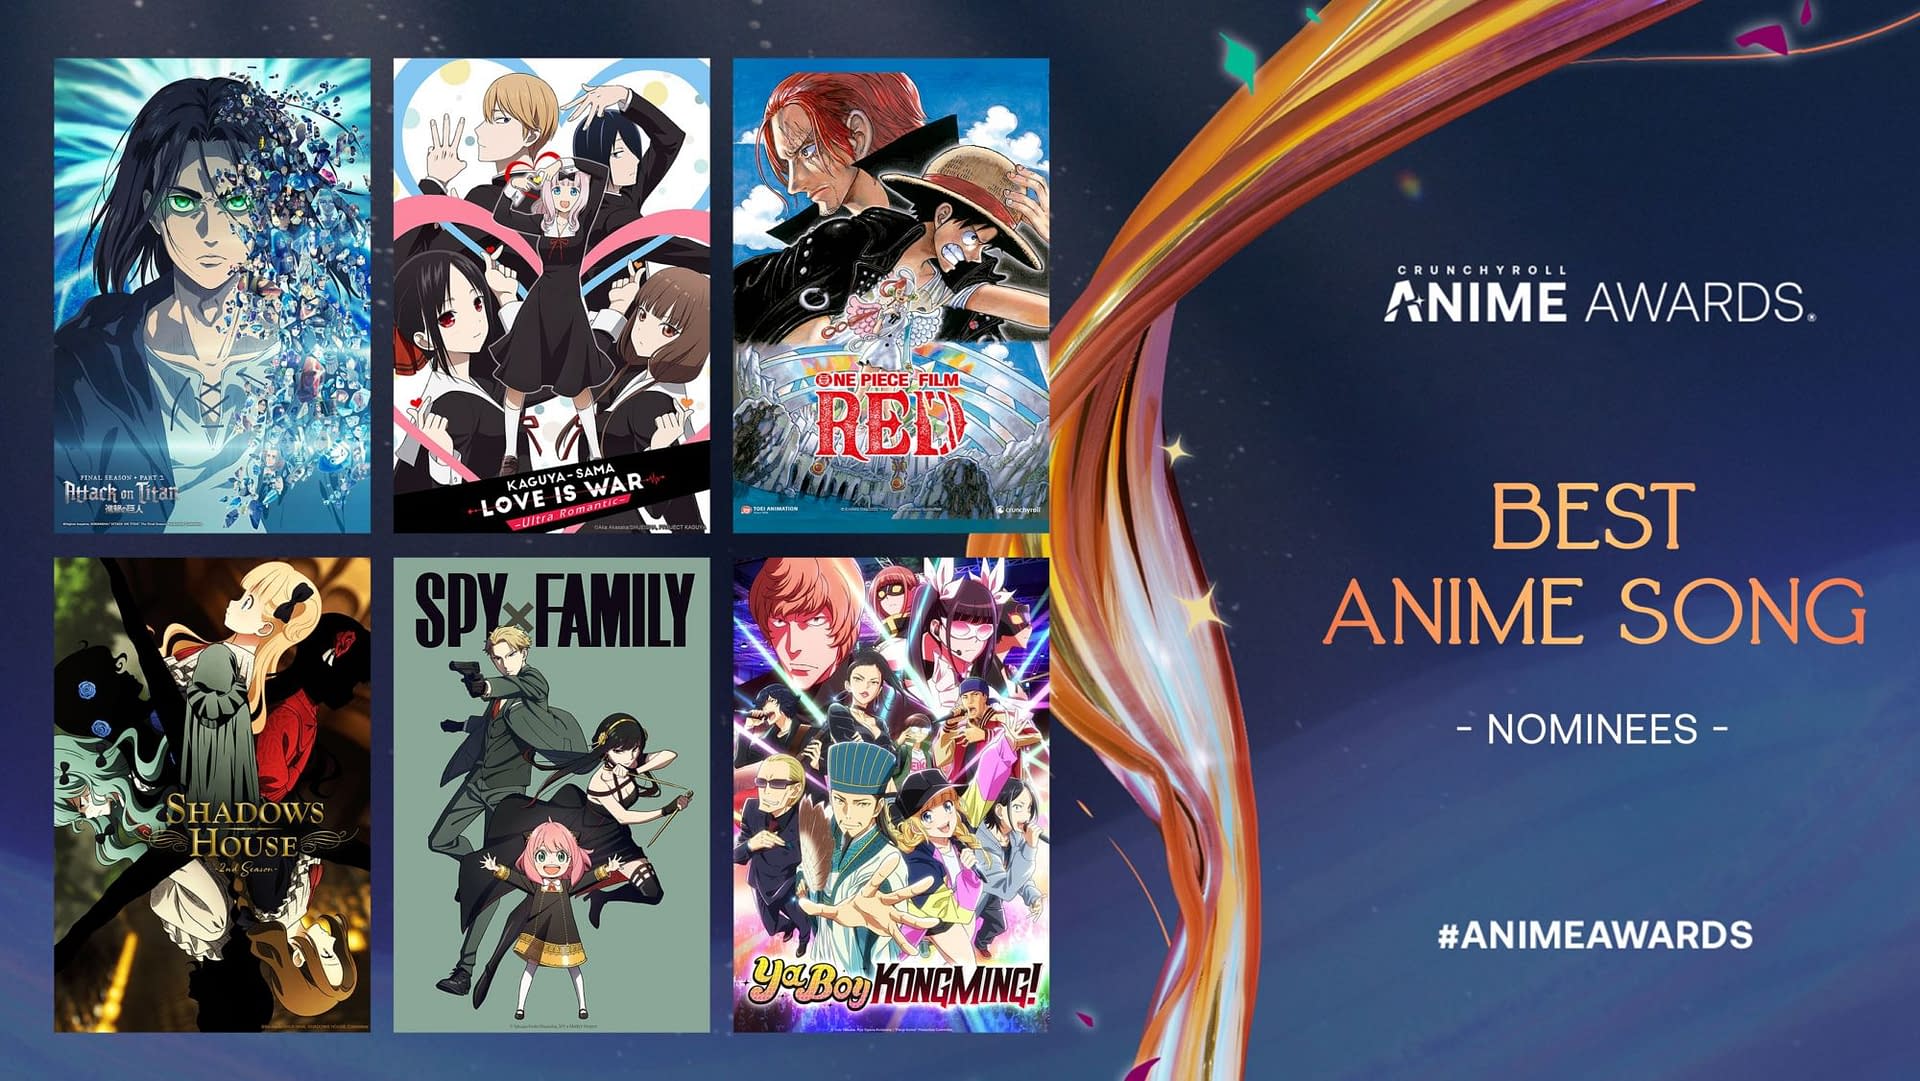 Aincrad News on X: Kadokawa Newtype Anime Awards - Male Character Award  Winner: 1. Kirito - Sword Art Online 2. Loid Forger - Spy X Family 3.  Muichiro Tokito - Demon Slayer. #